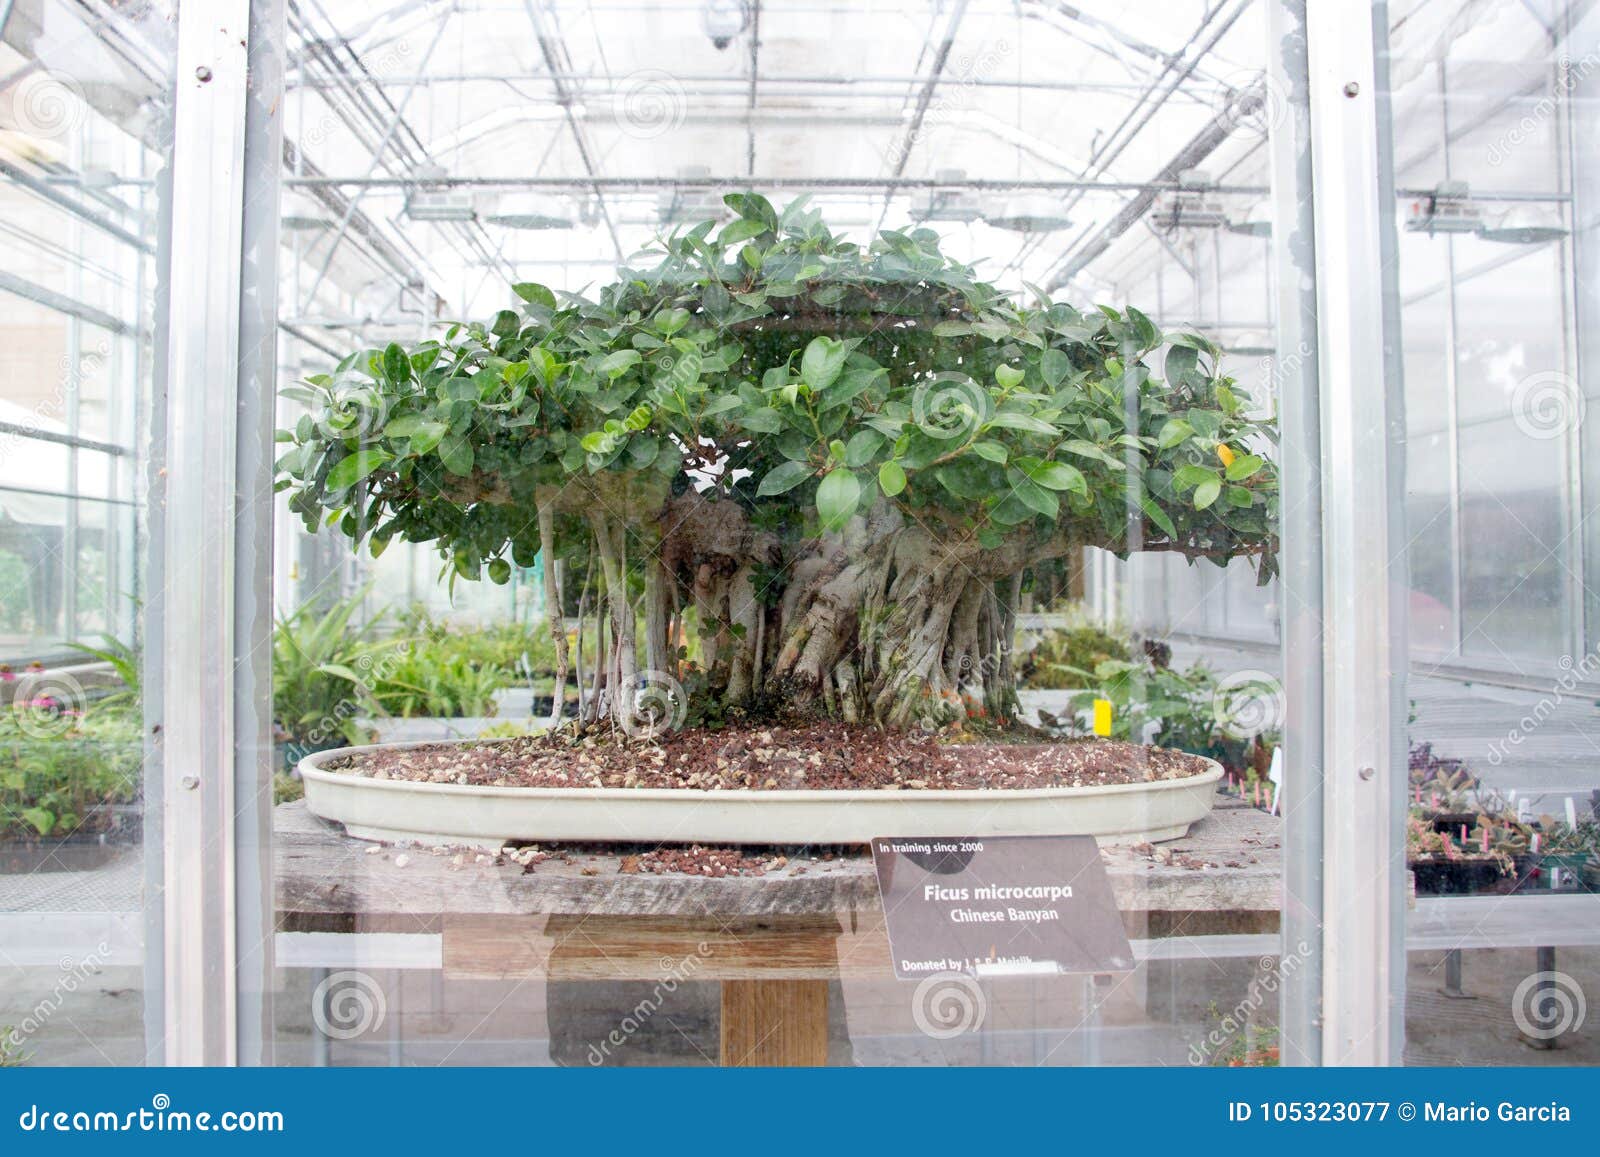 Greenhouse Denver Botanical Gardens Stock Image Image Of